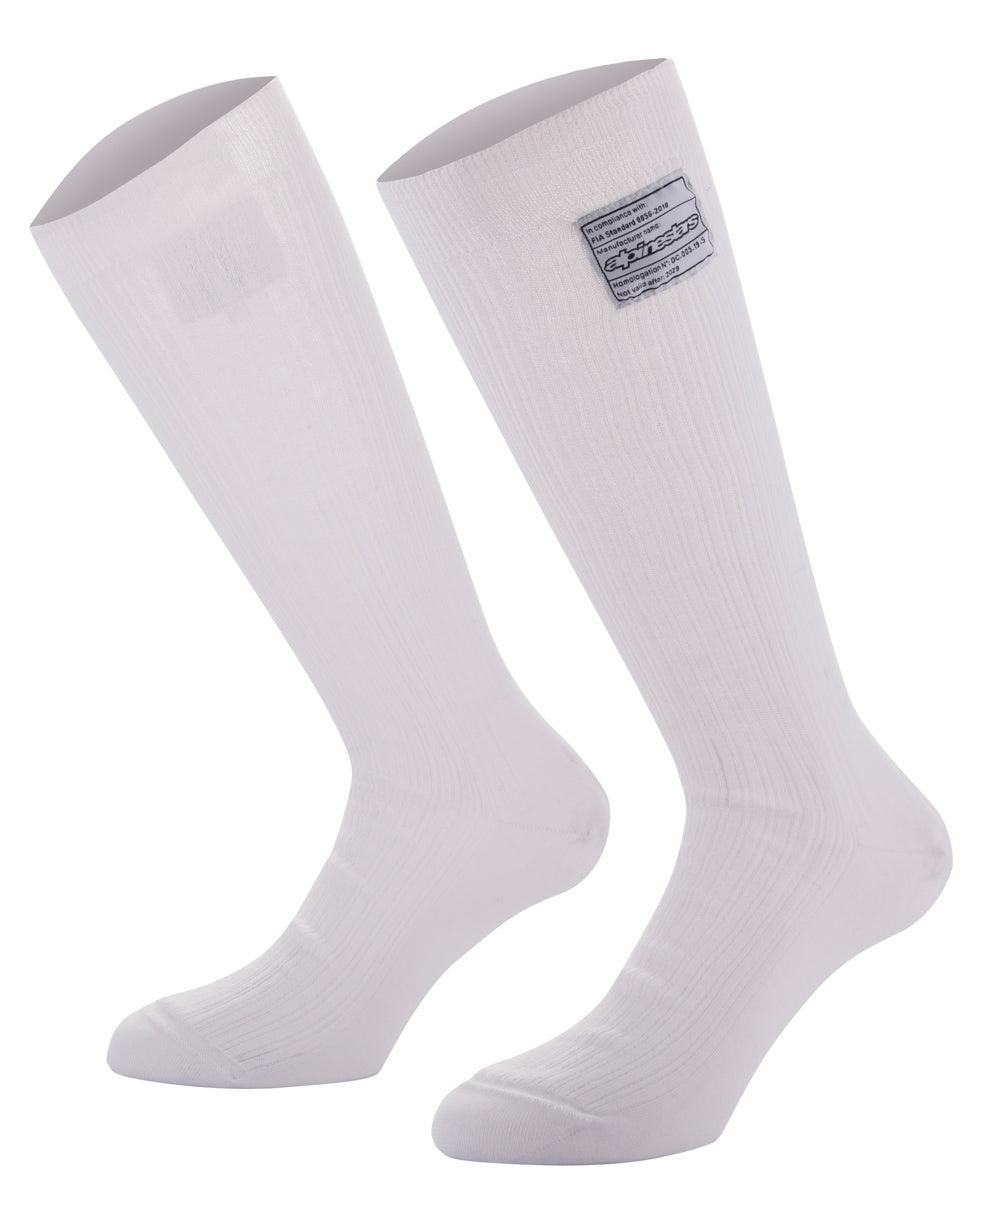 Socks Race V4 White Medium - Burlile Performance Products